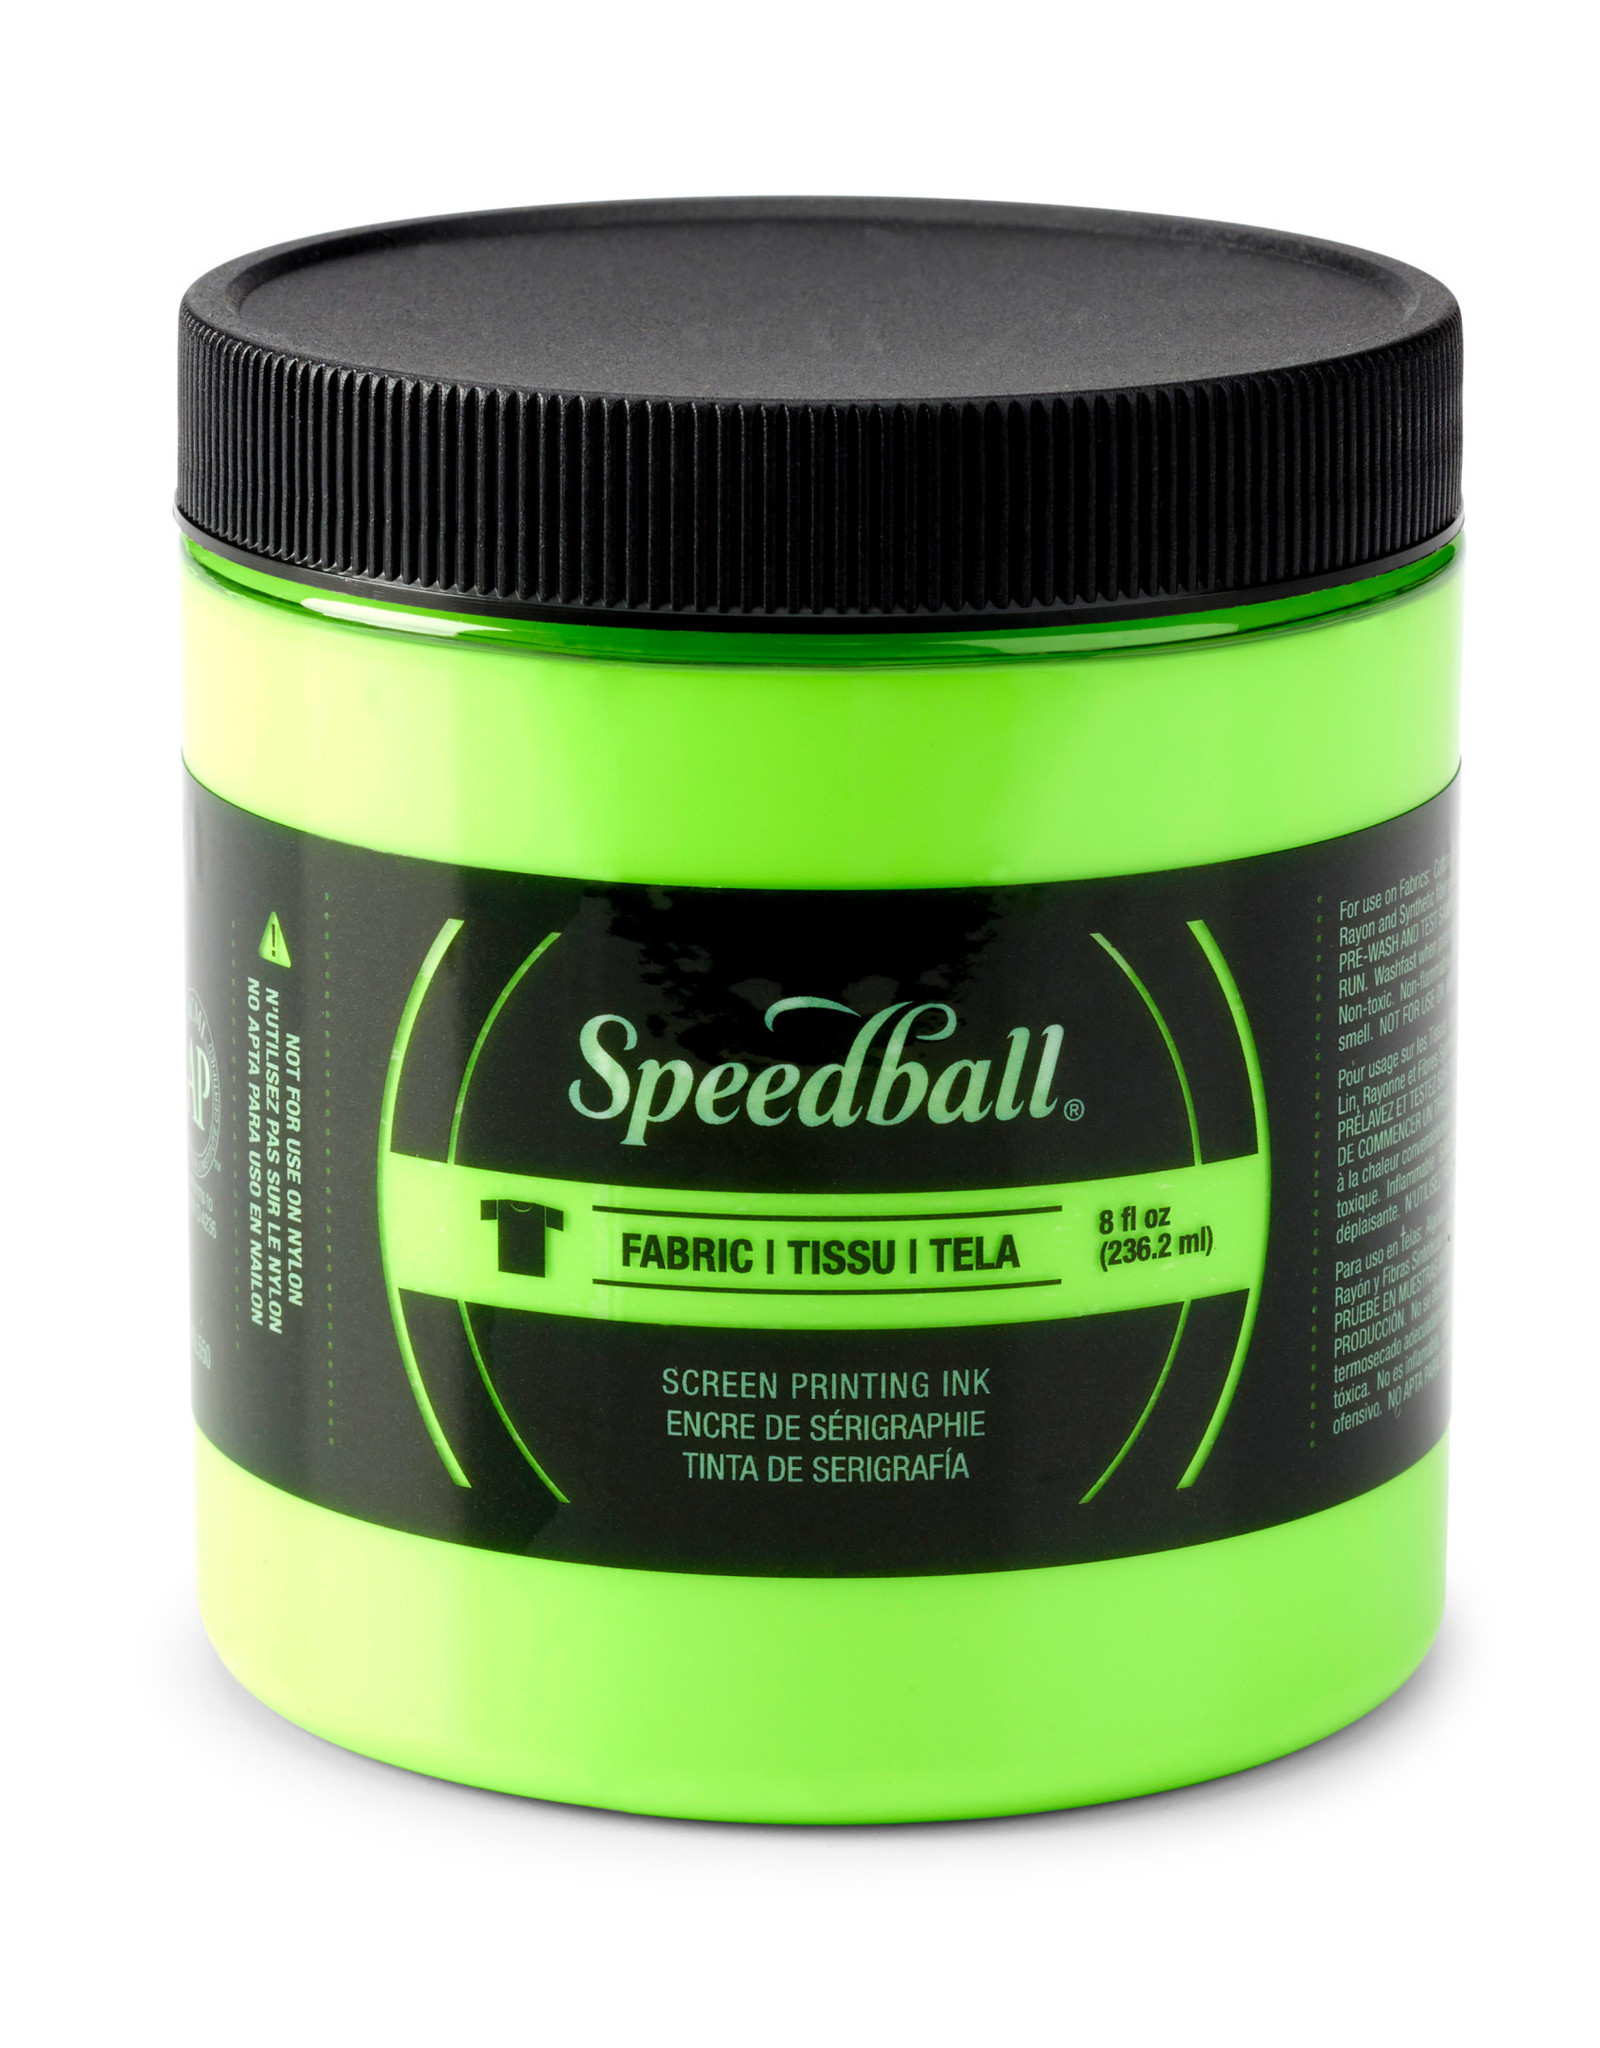 SPEEDBALL ART PRODUCTS Speedball Fabric Screen Printing Ink, Fluorescent Lime Green, 8oz